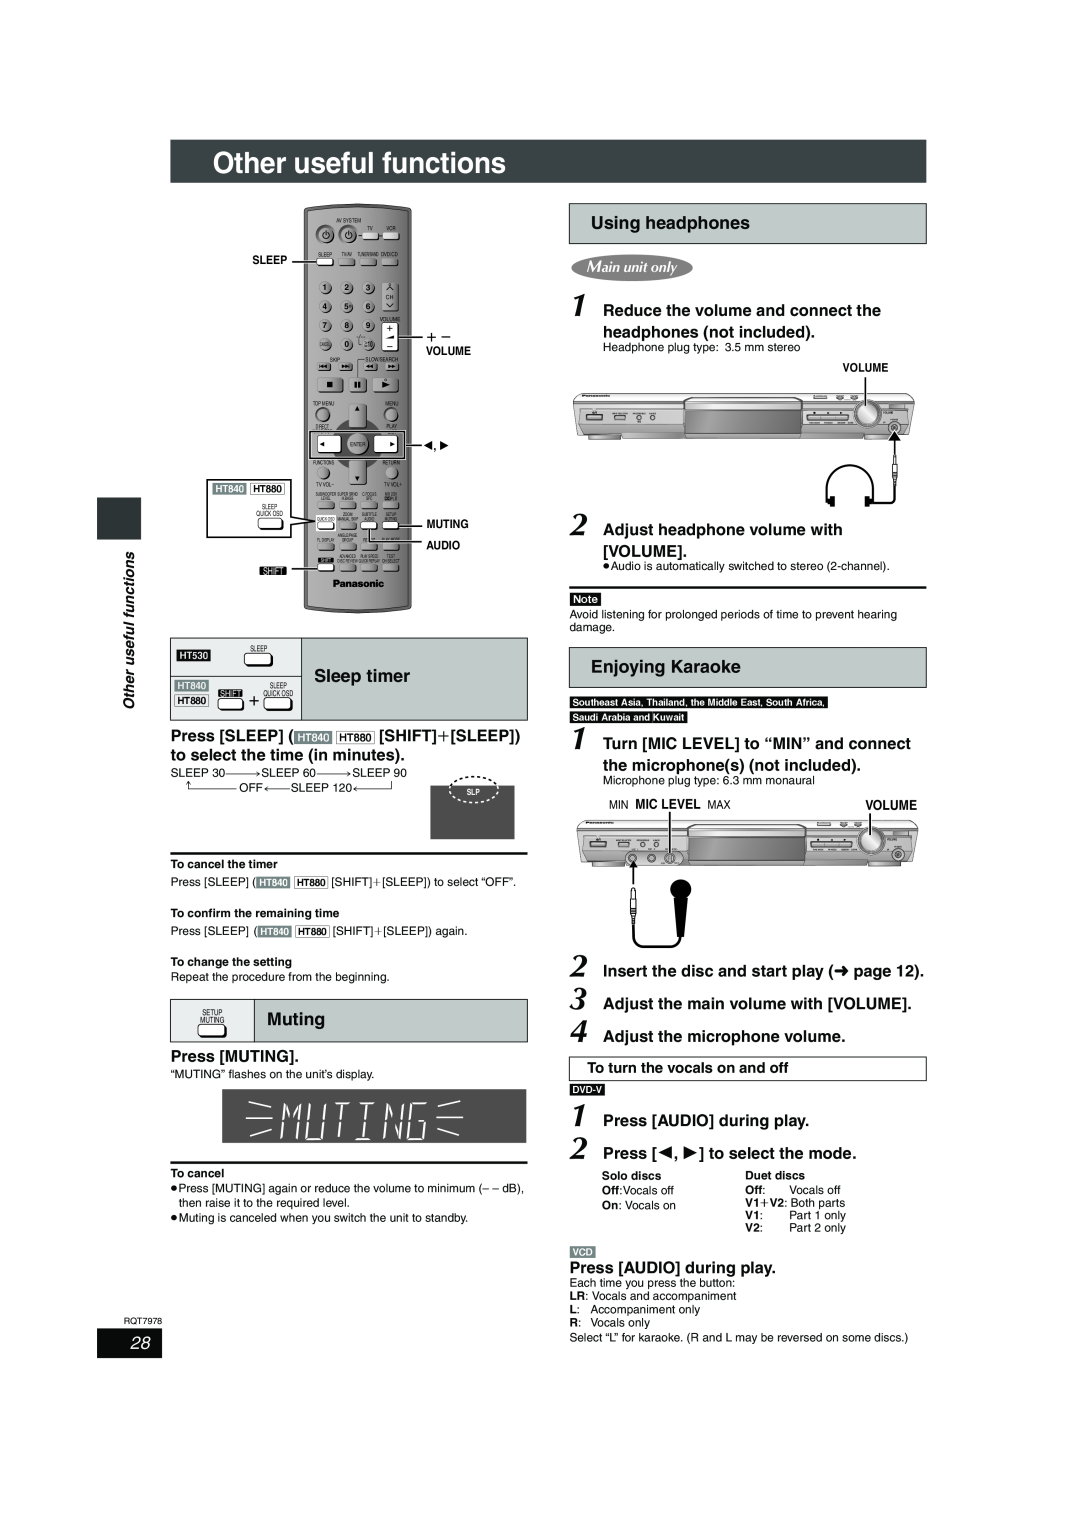 Panasonic SC-HT840 Other useful functions, Sleep timer, Muting, Using headphones, Enjoying Karaoke, Press MUTING, Dvd-V 